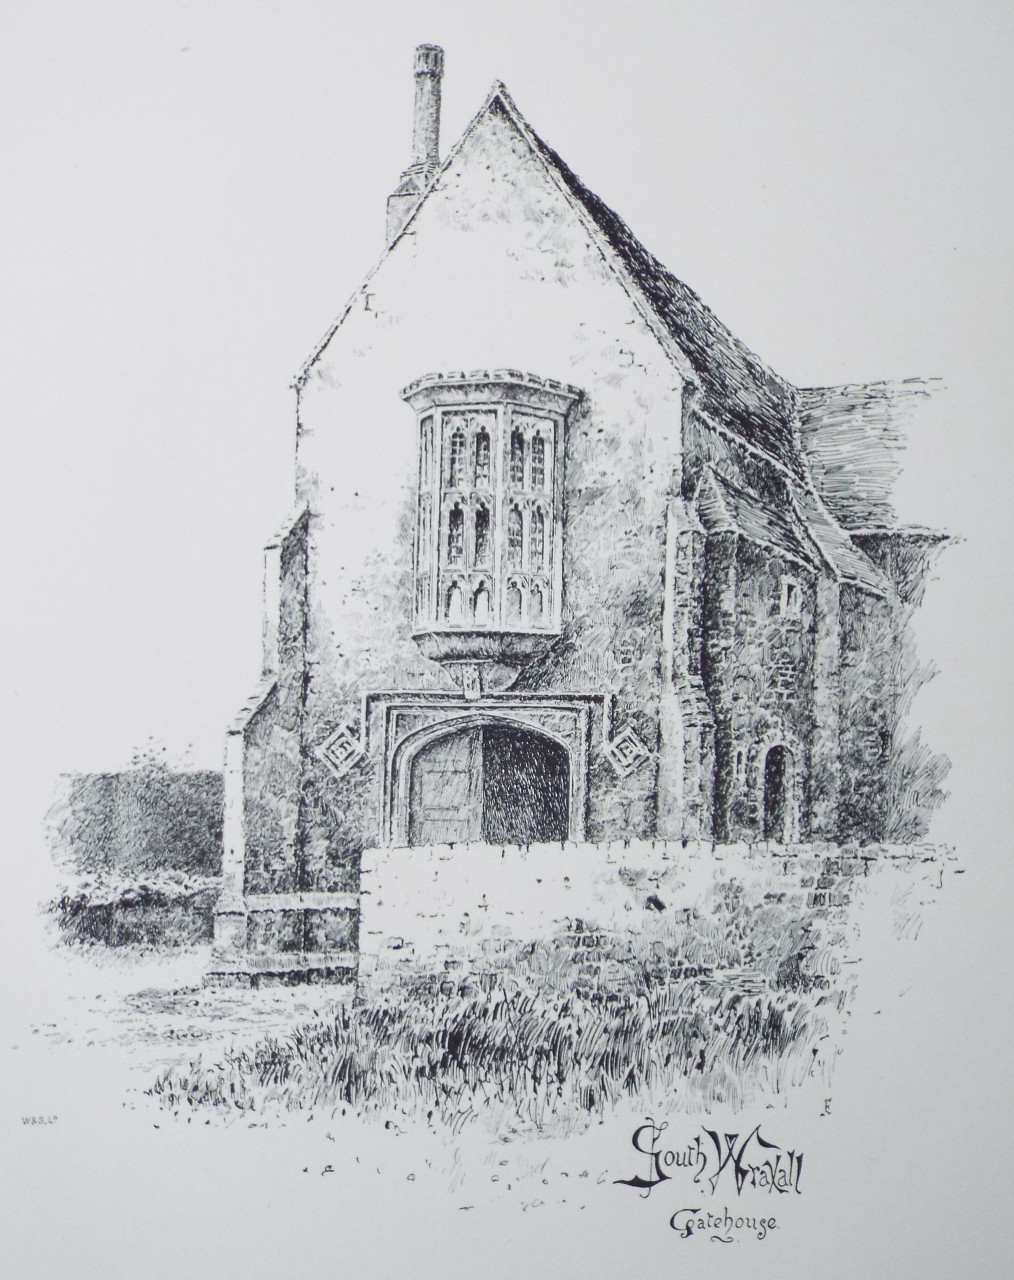 Lithograph - South Wraxhall Gatehouse